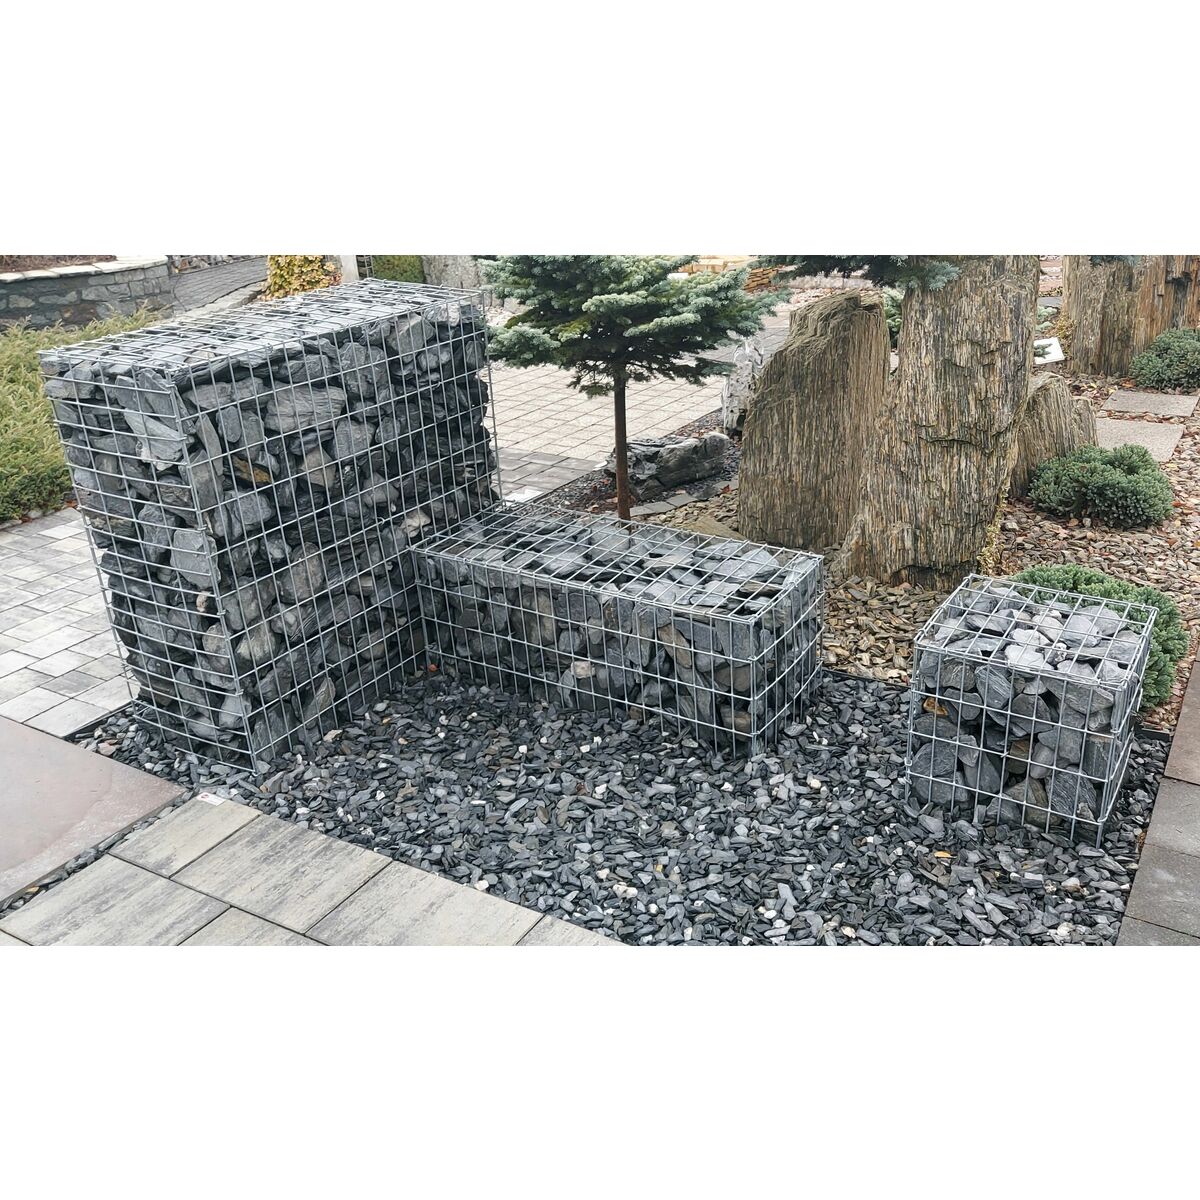 Kamień do gabionów 60-250mm 120kg Garden Stones